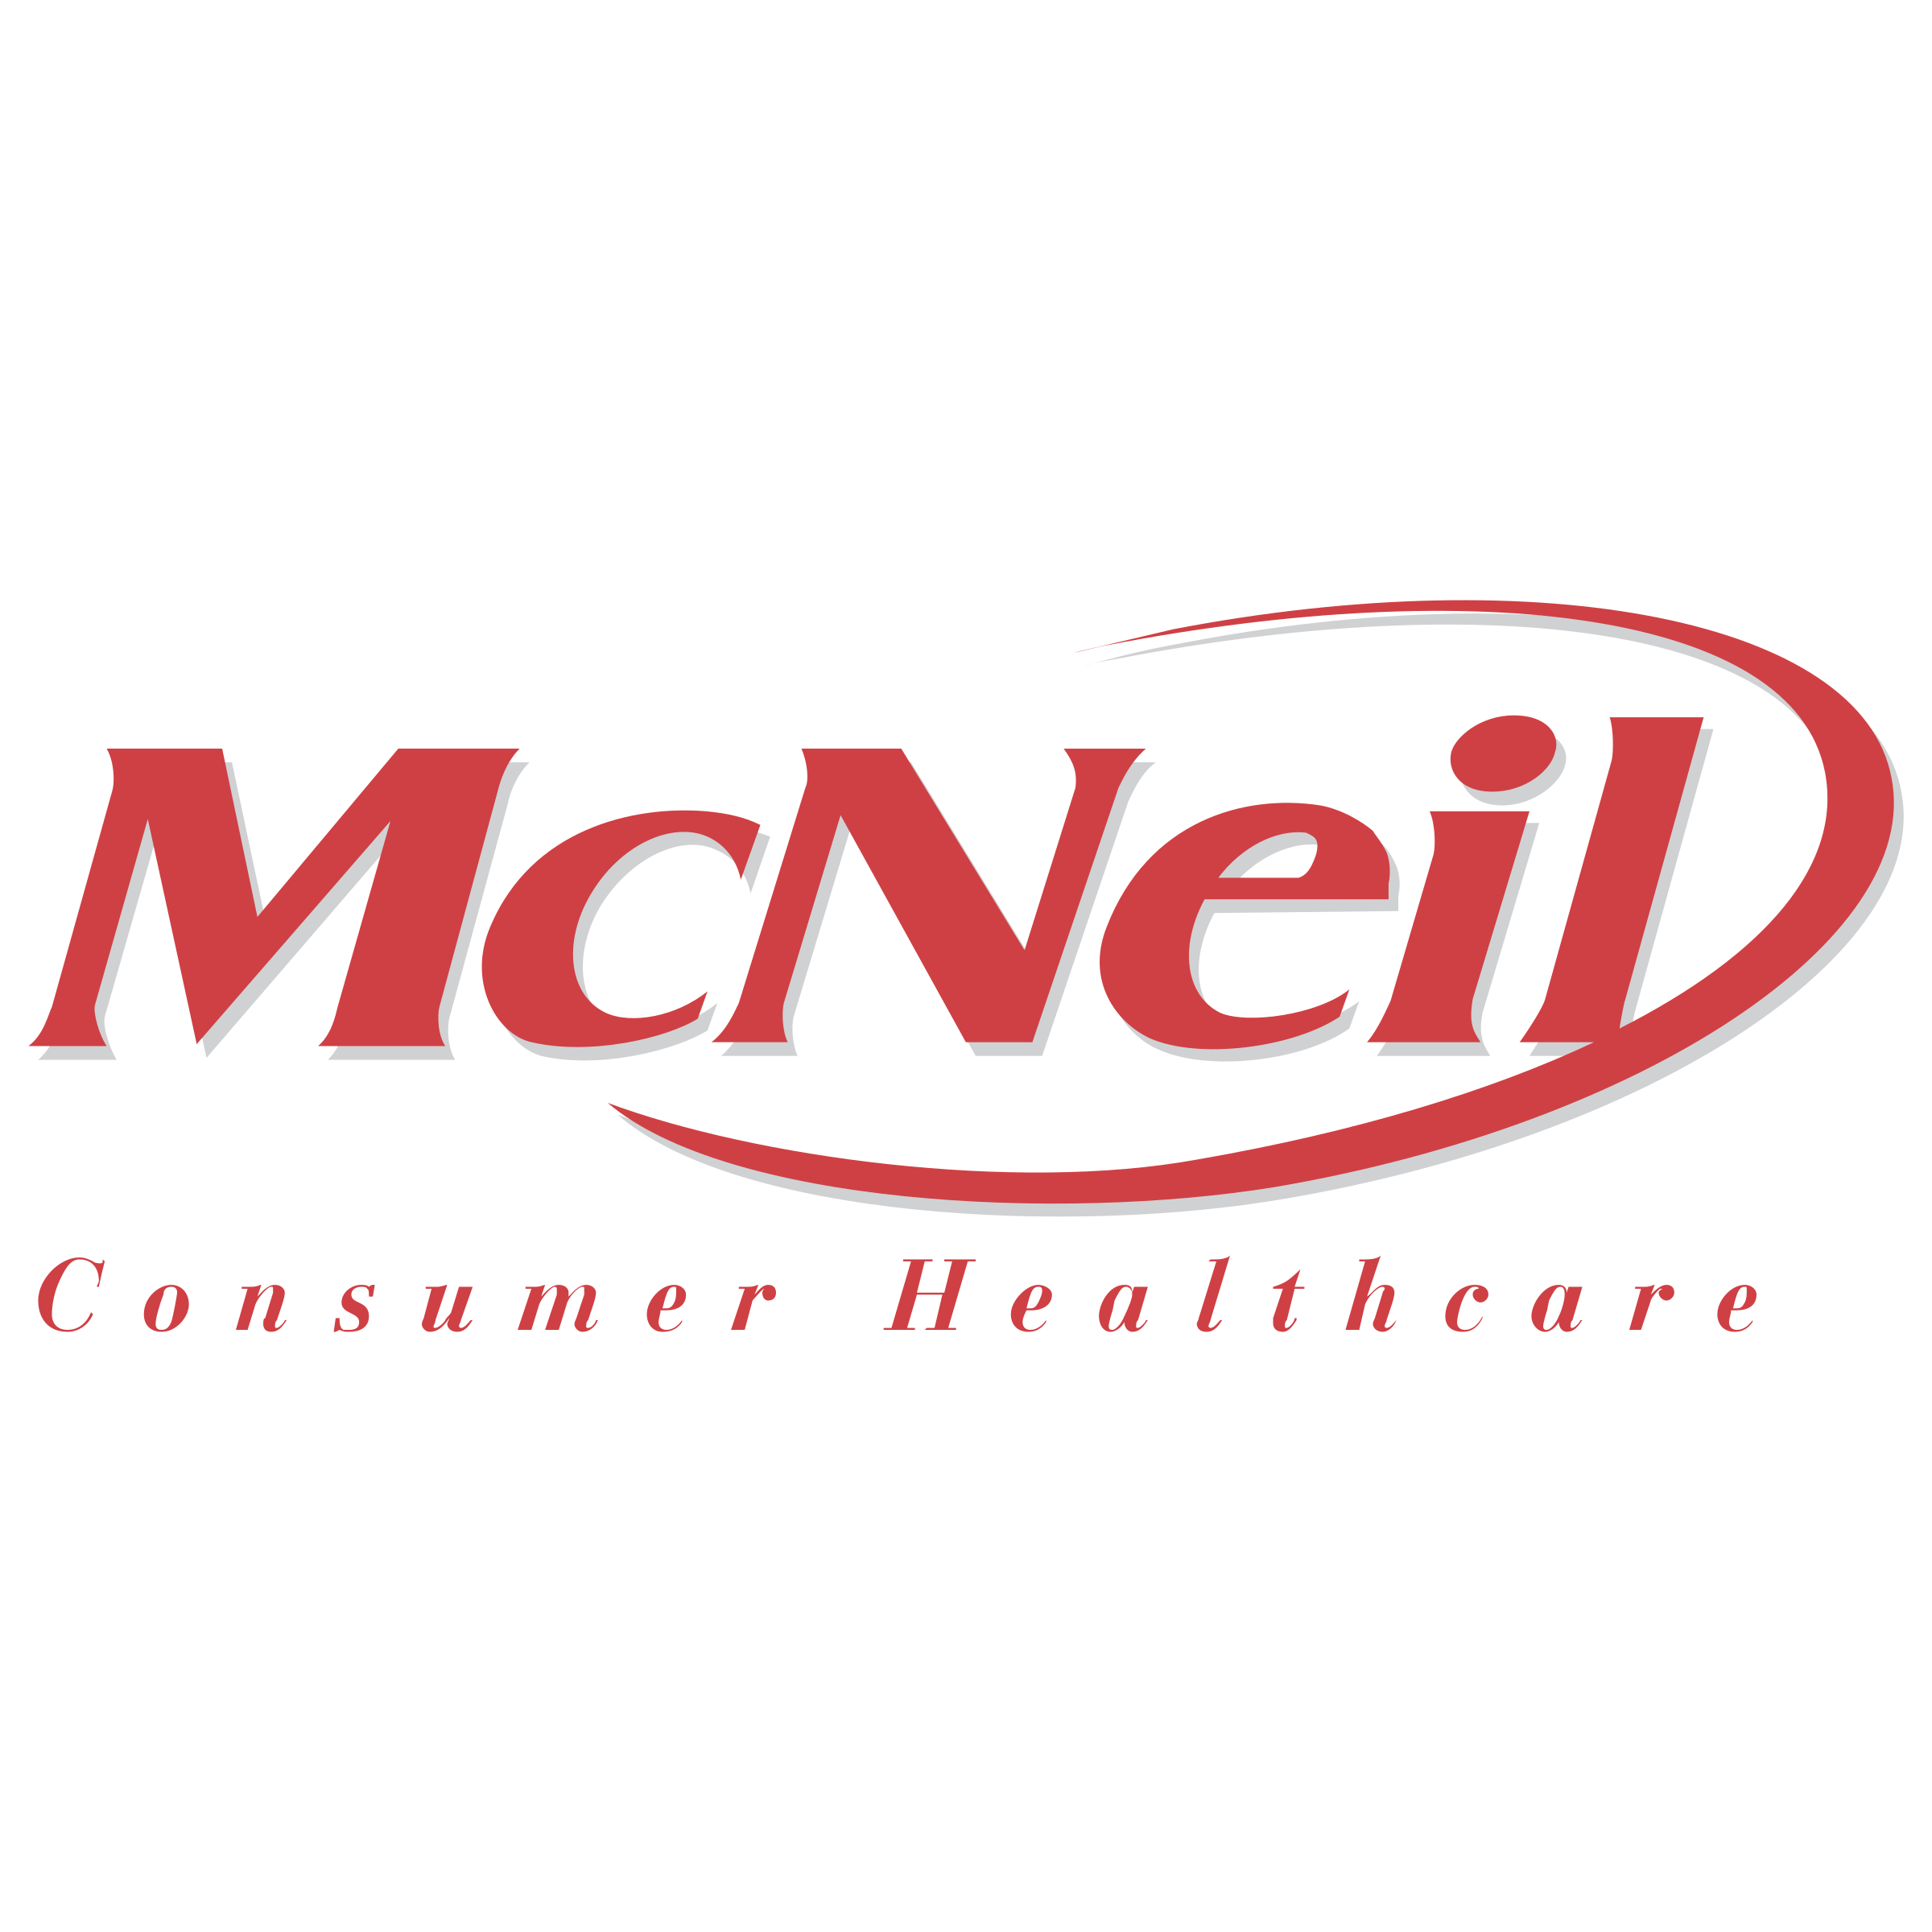 McNeil Logo - McNeil Logo PNG Transparent & SVG Vector